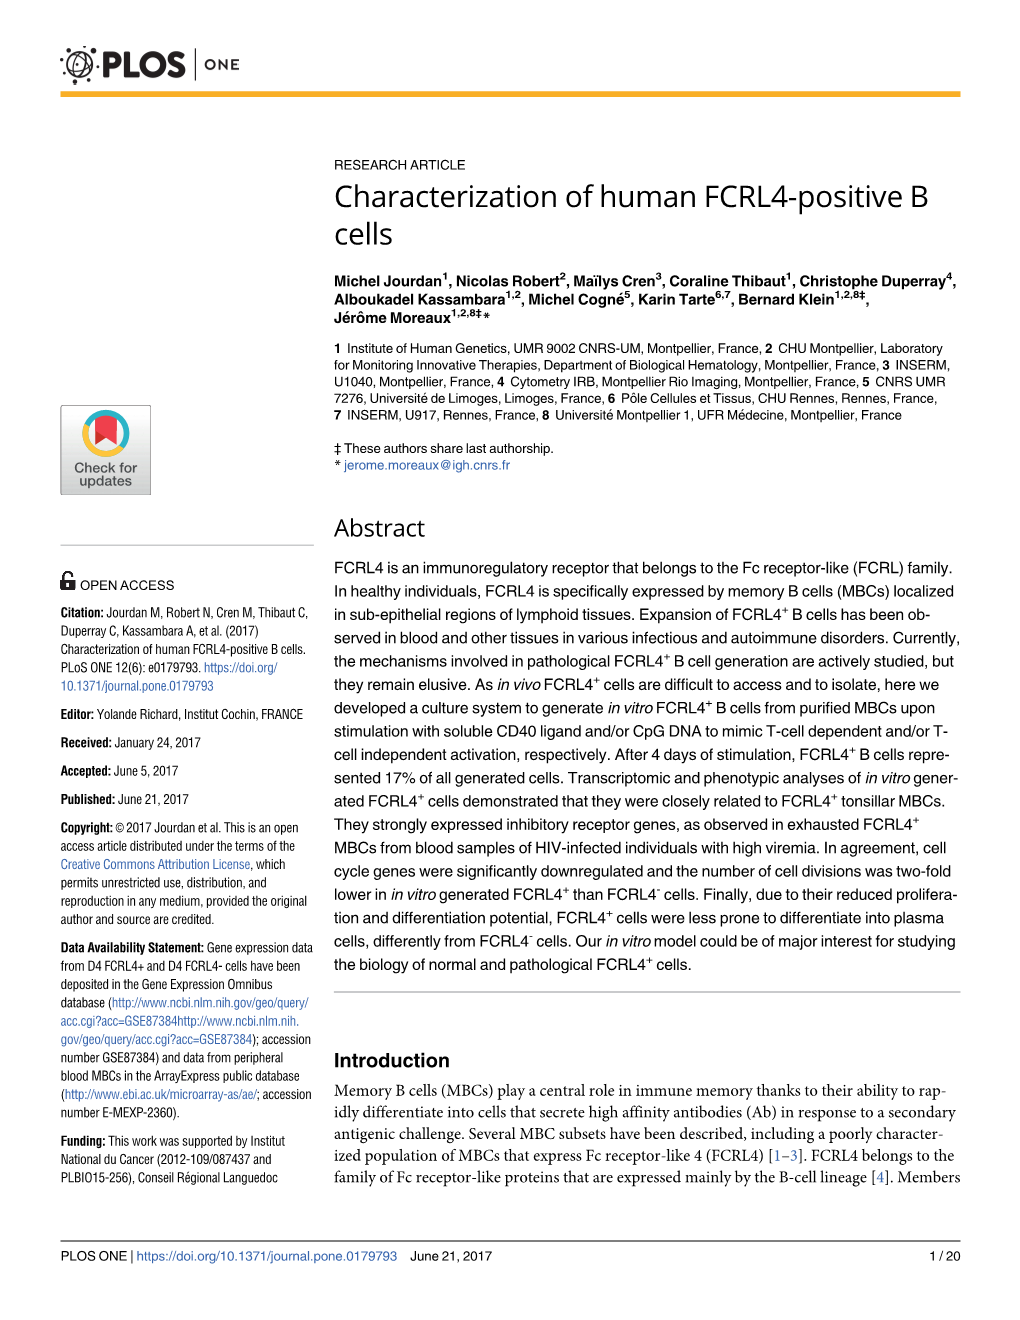 Characterization of Human FCRL4-Positive B Cells